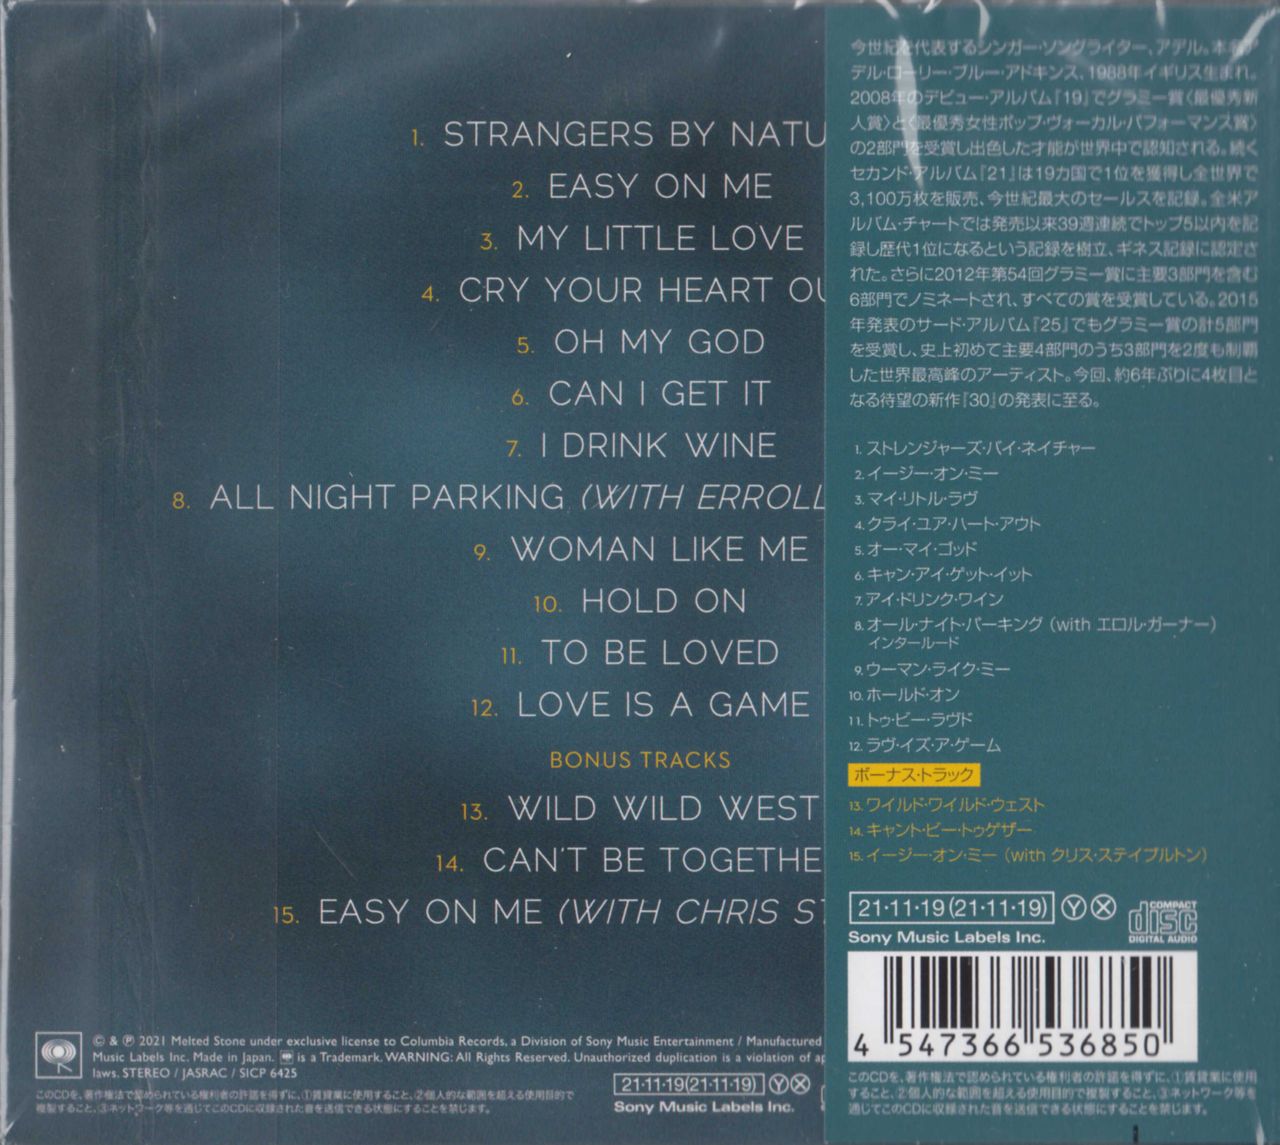 Adele 30 - Thirty Japanese CD album